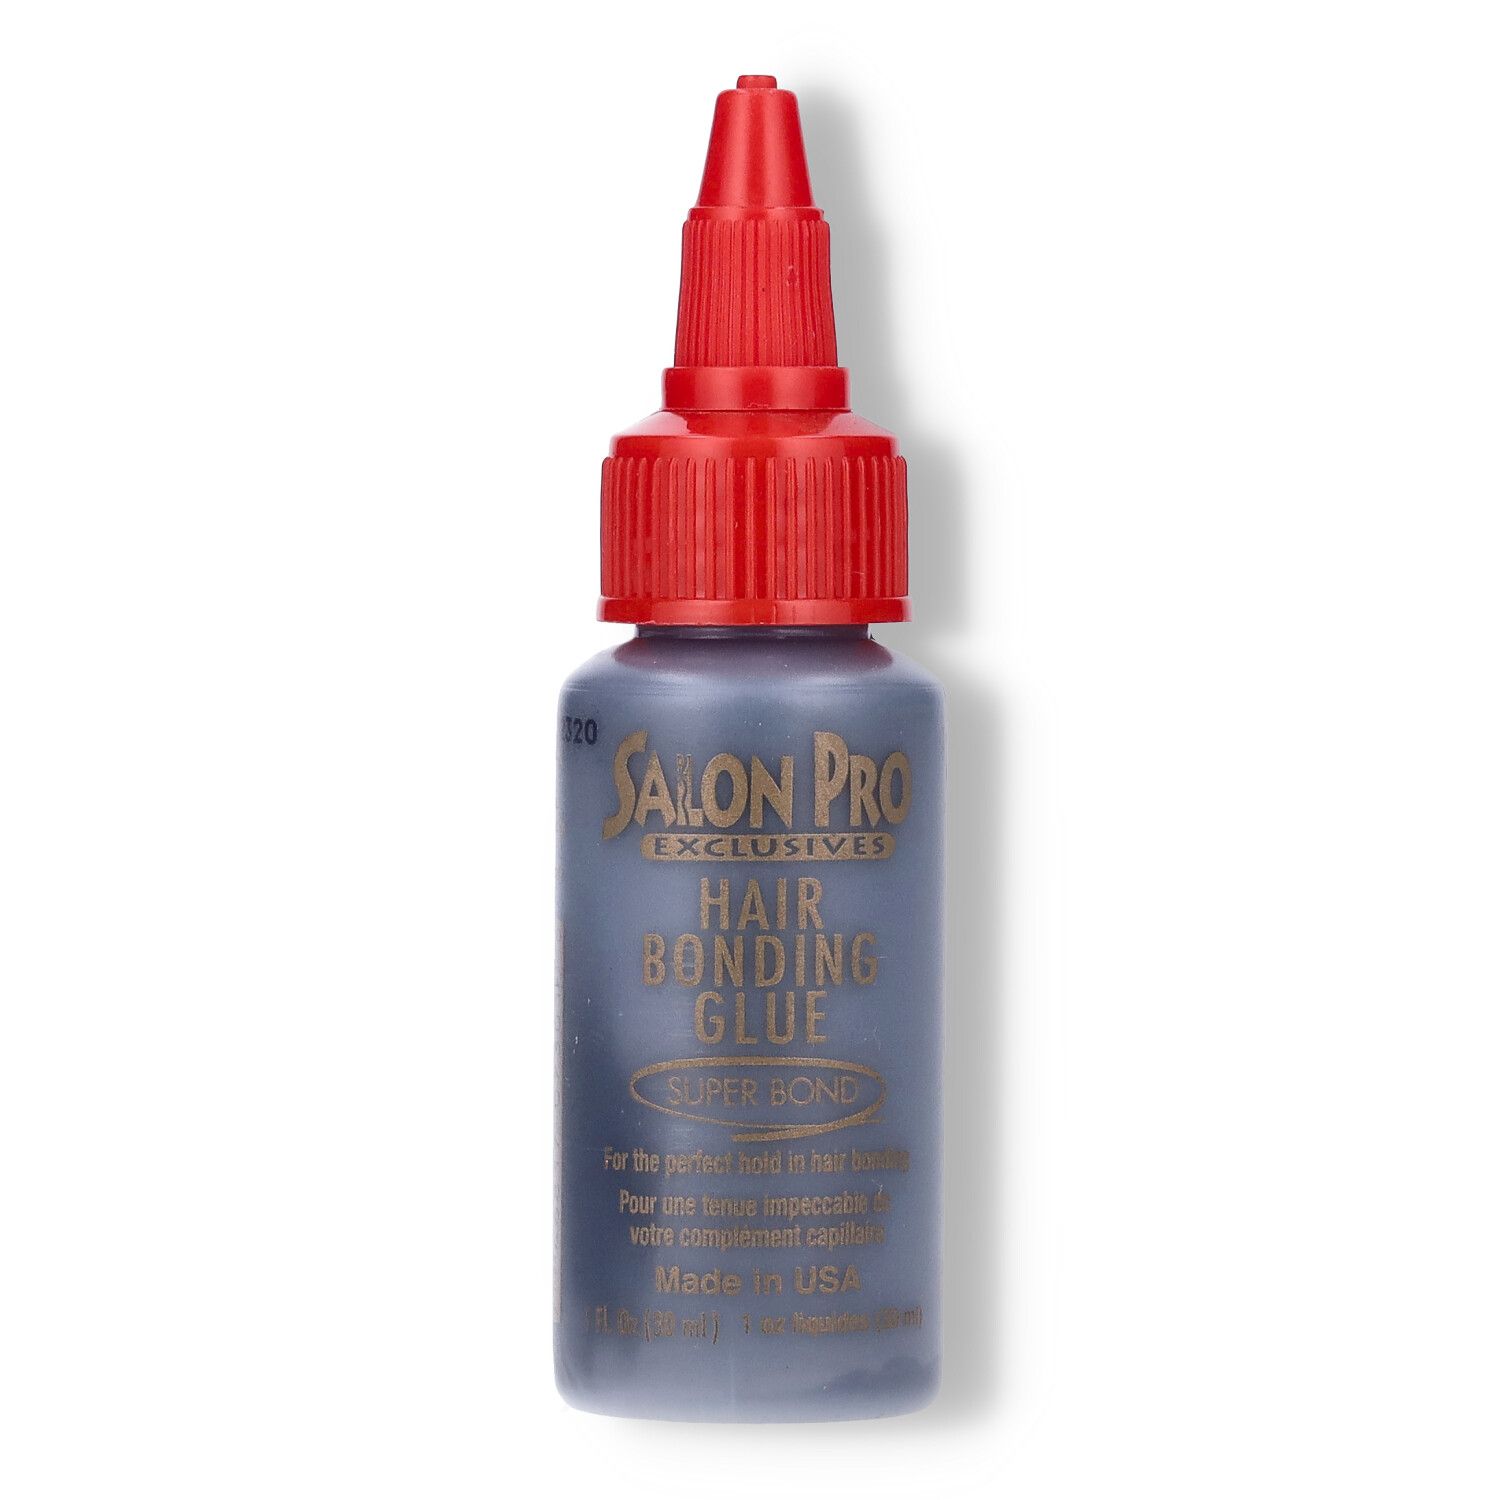 Salon Pro Exclusive Anti-fungus Hair Bonding Glue - Black - 1oz